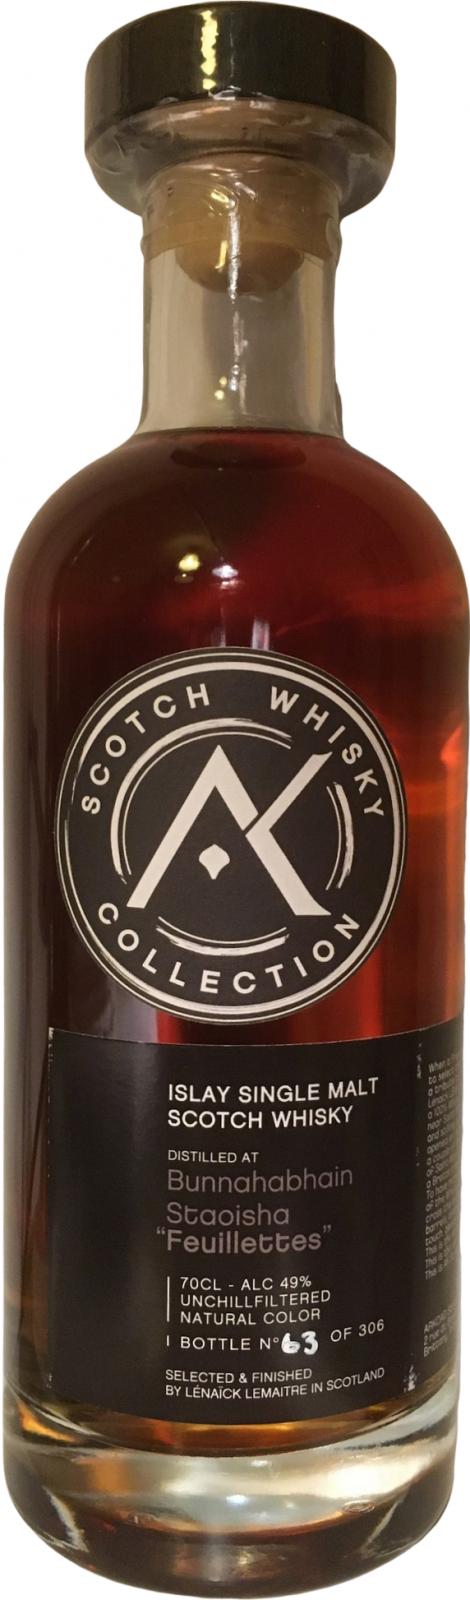 Bunnahabhain Staoisha Feuillettes Nag Arkoad Scotch Whisky Collection Fut feuillette 49% 700ml